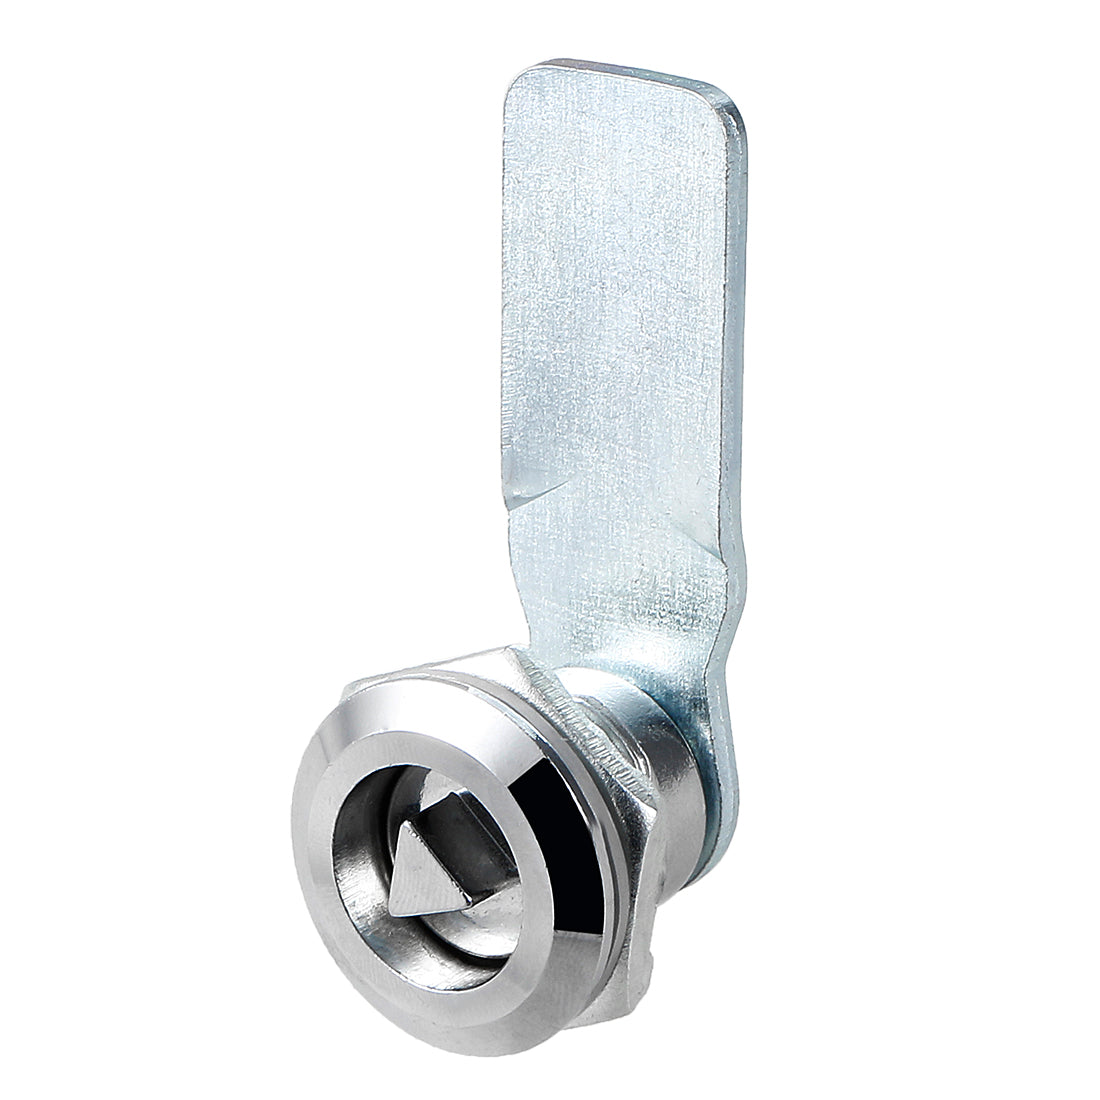 uxcell Uxcell 22mm Cylinder Zinc Alloy Chrome Finish Cam Lock w Triangle Key, Keyed Alike